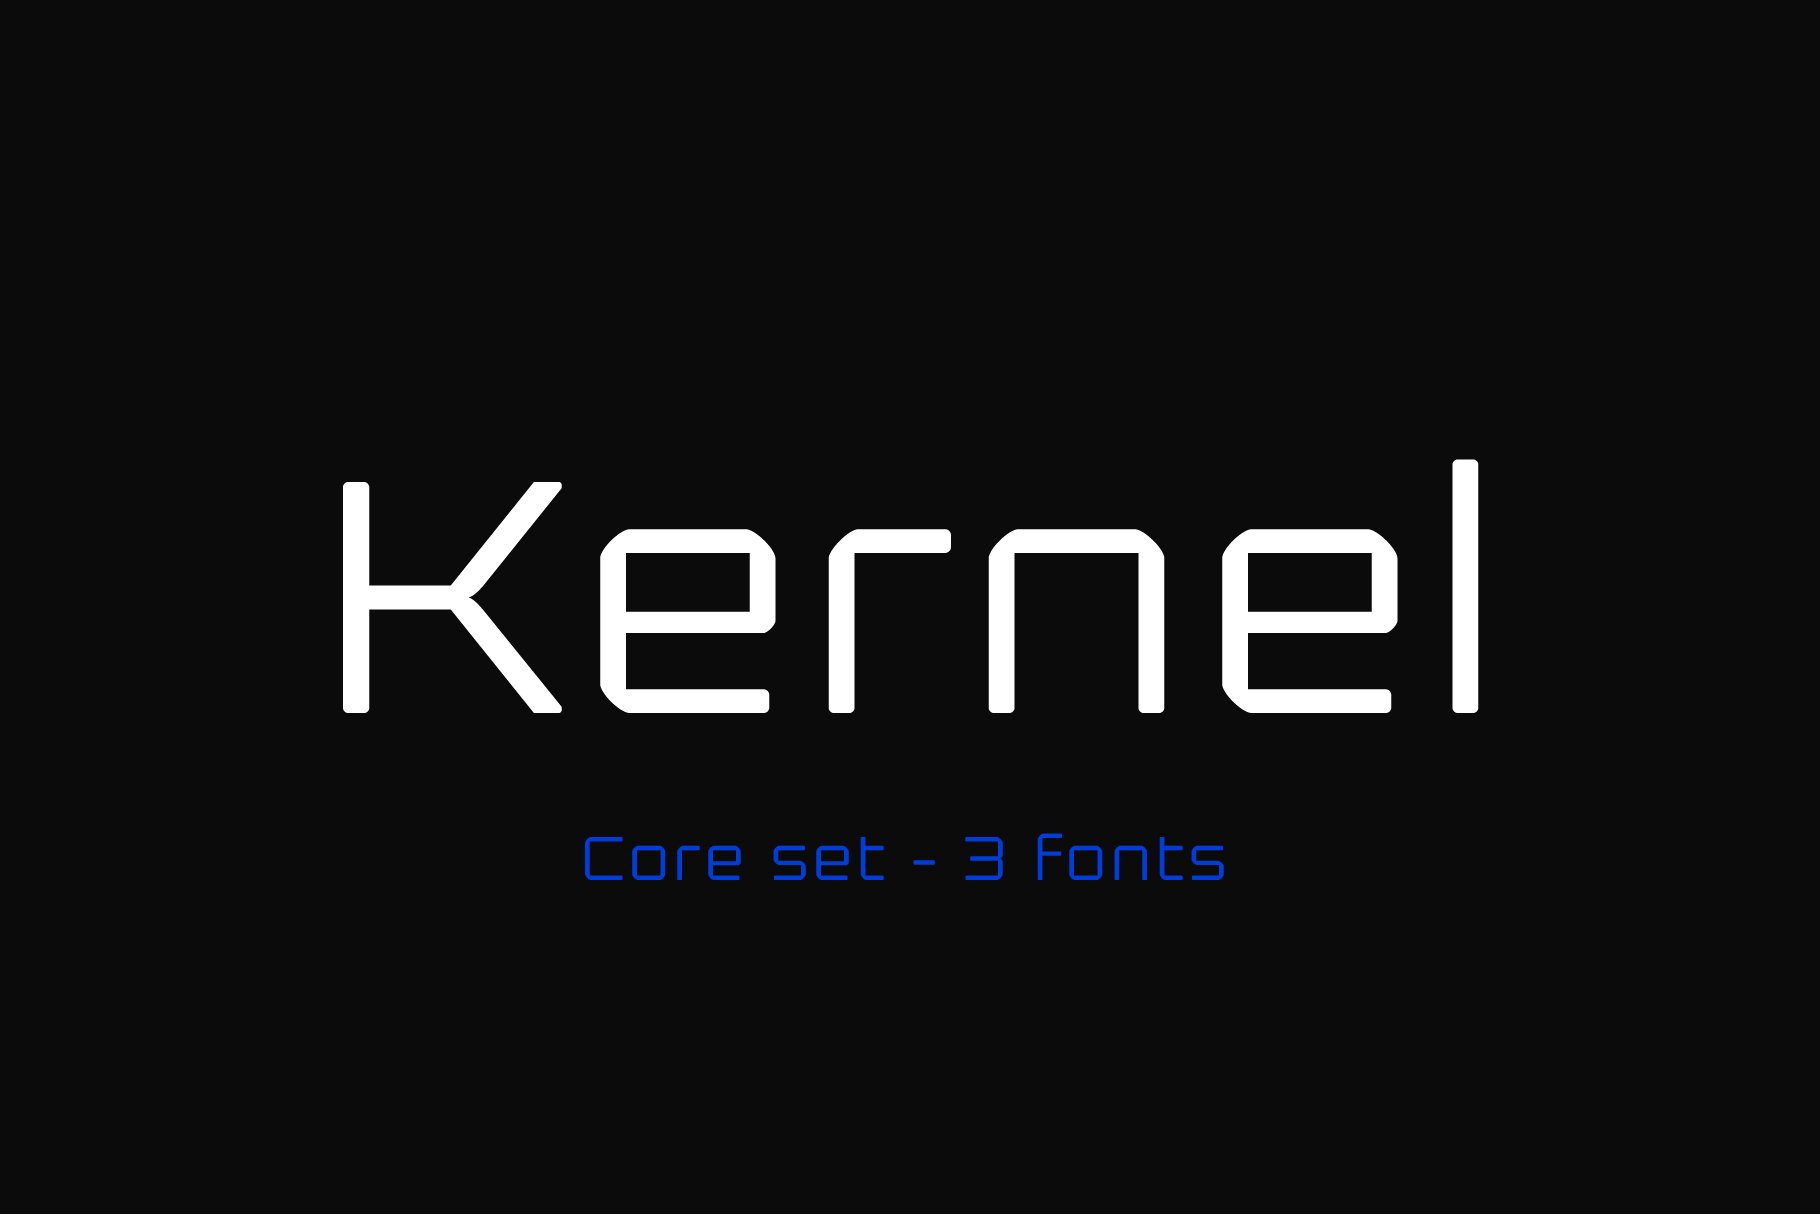 Kernel Core set cover image.